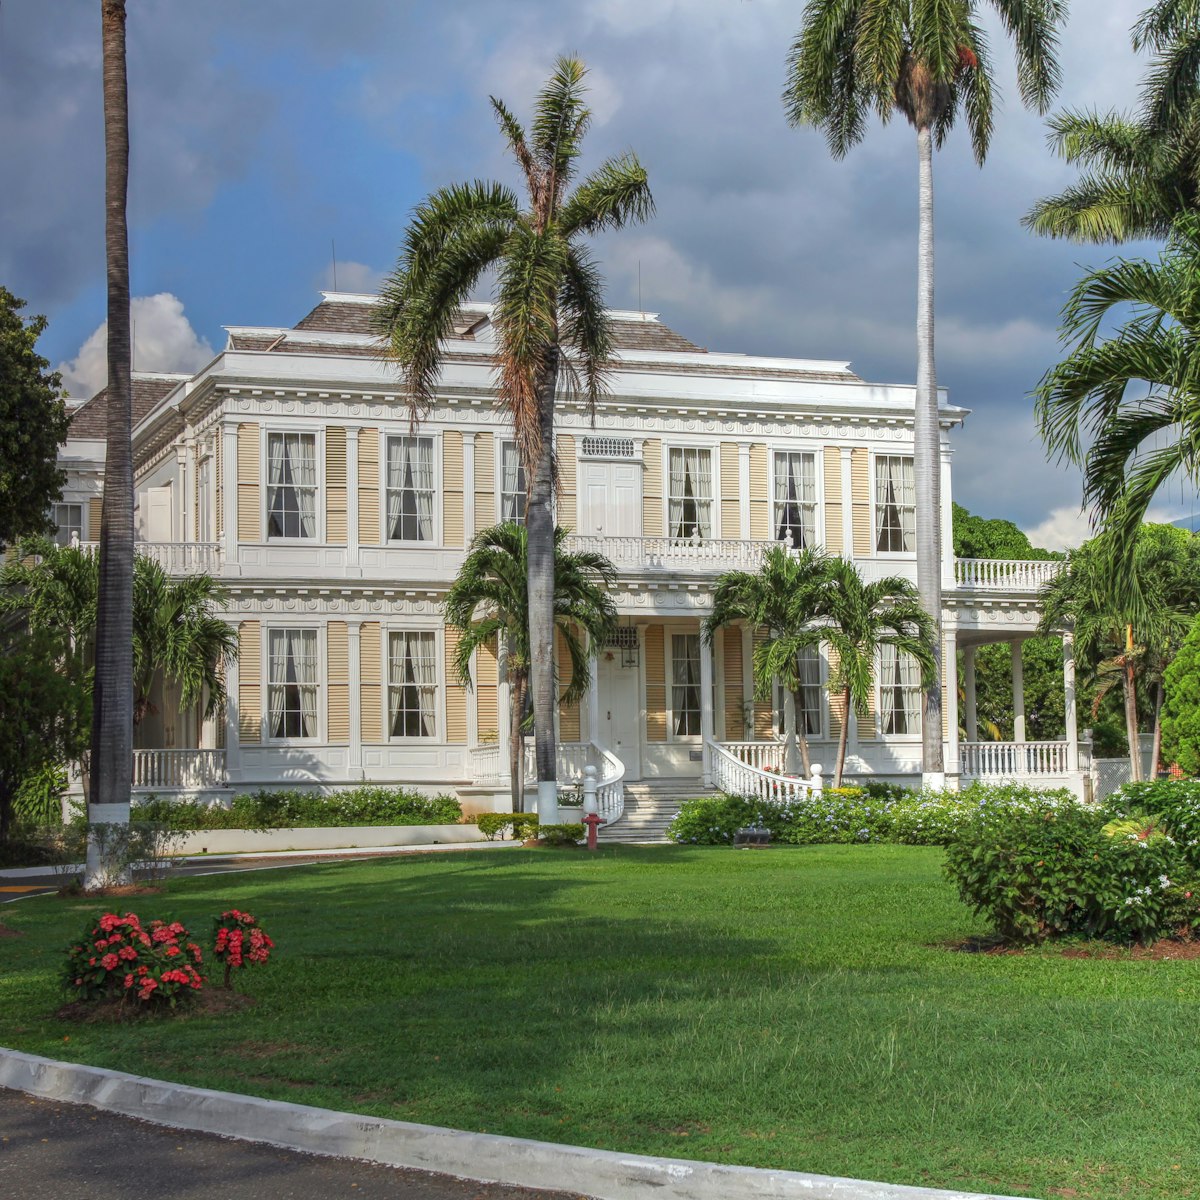 Devon House in Kingston, Jamaica.